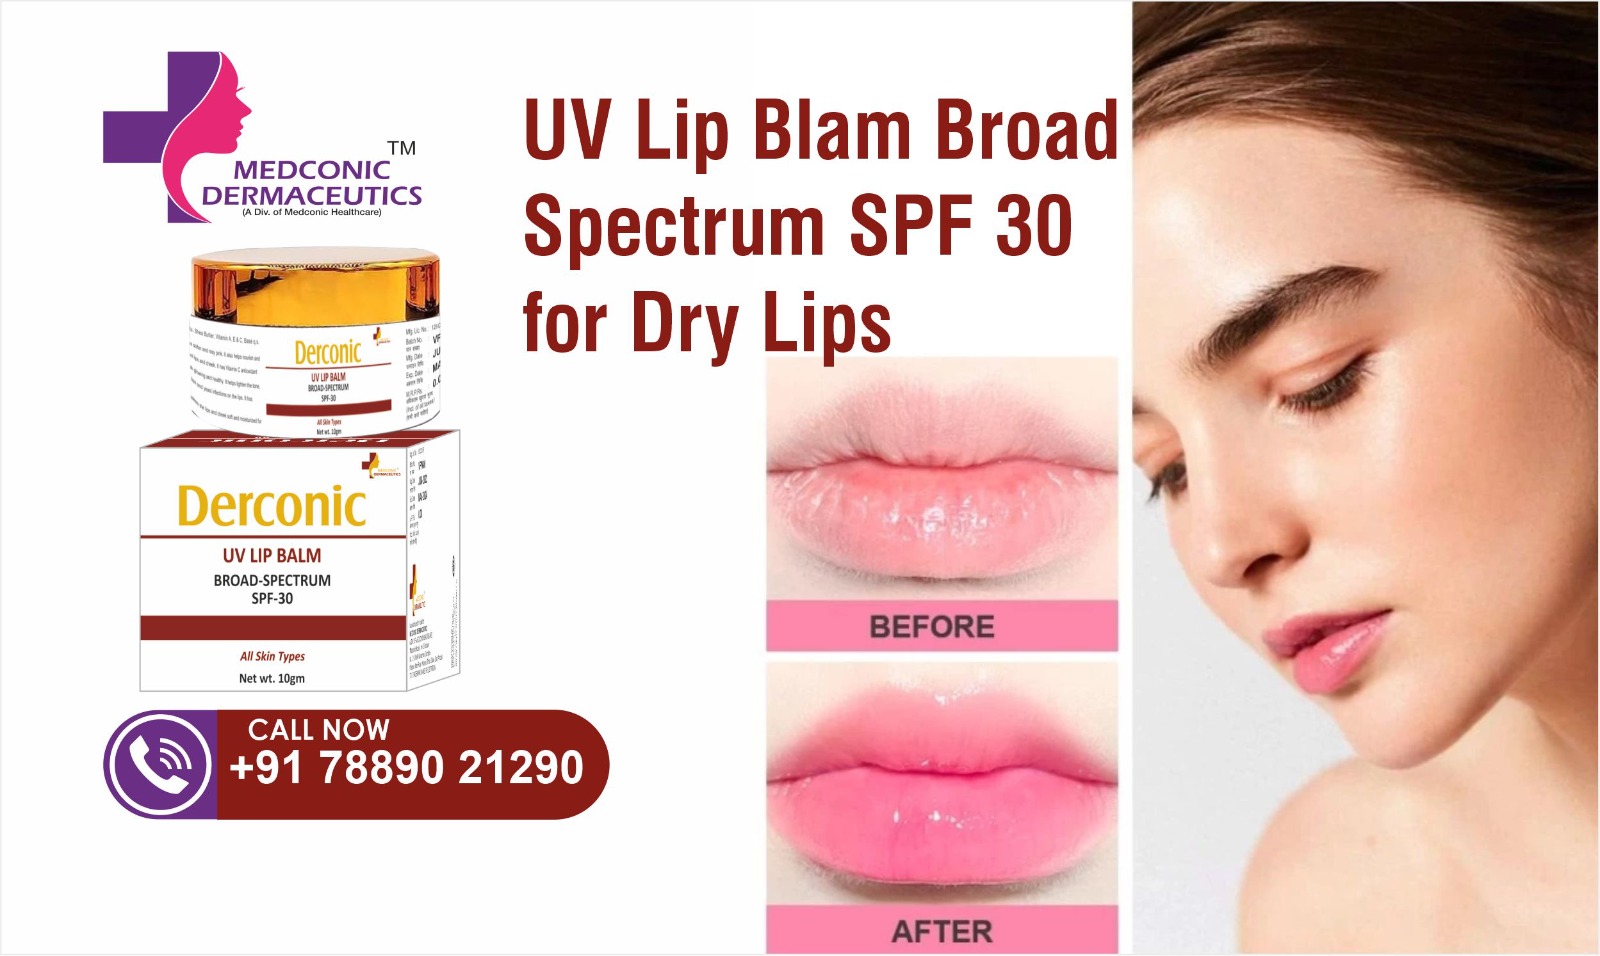 UV Lip Blam Broad Spectrum SPF 30 for Dry Lips